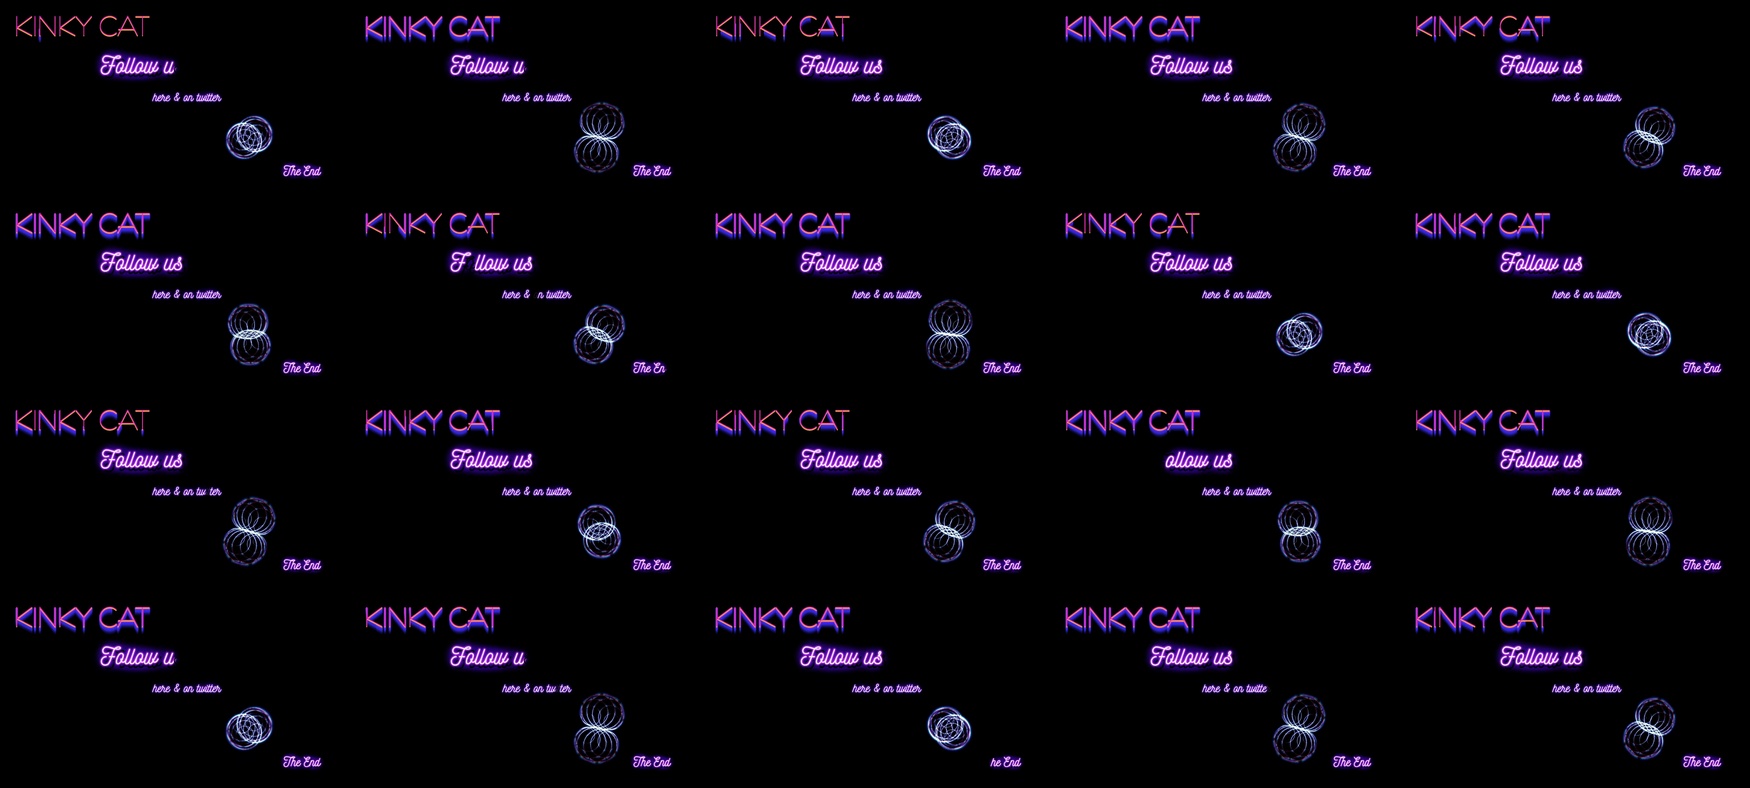 Kinky cat